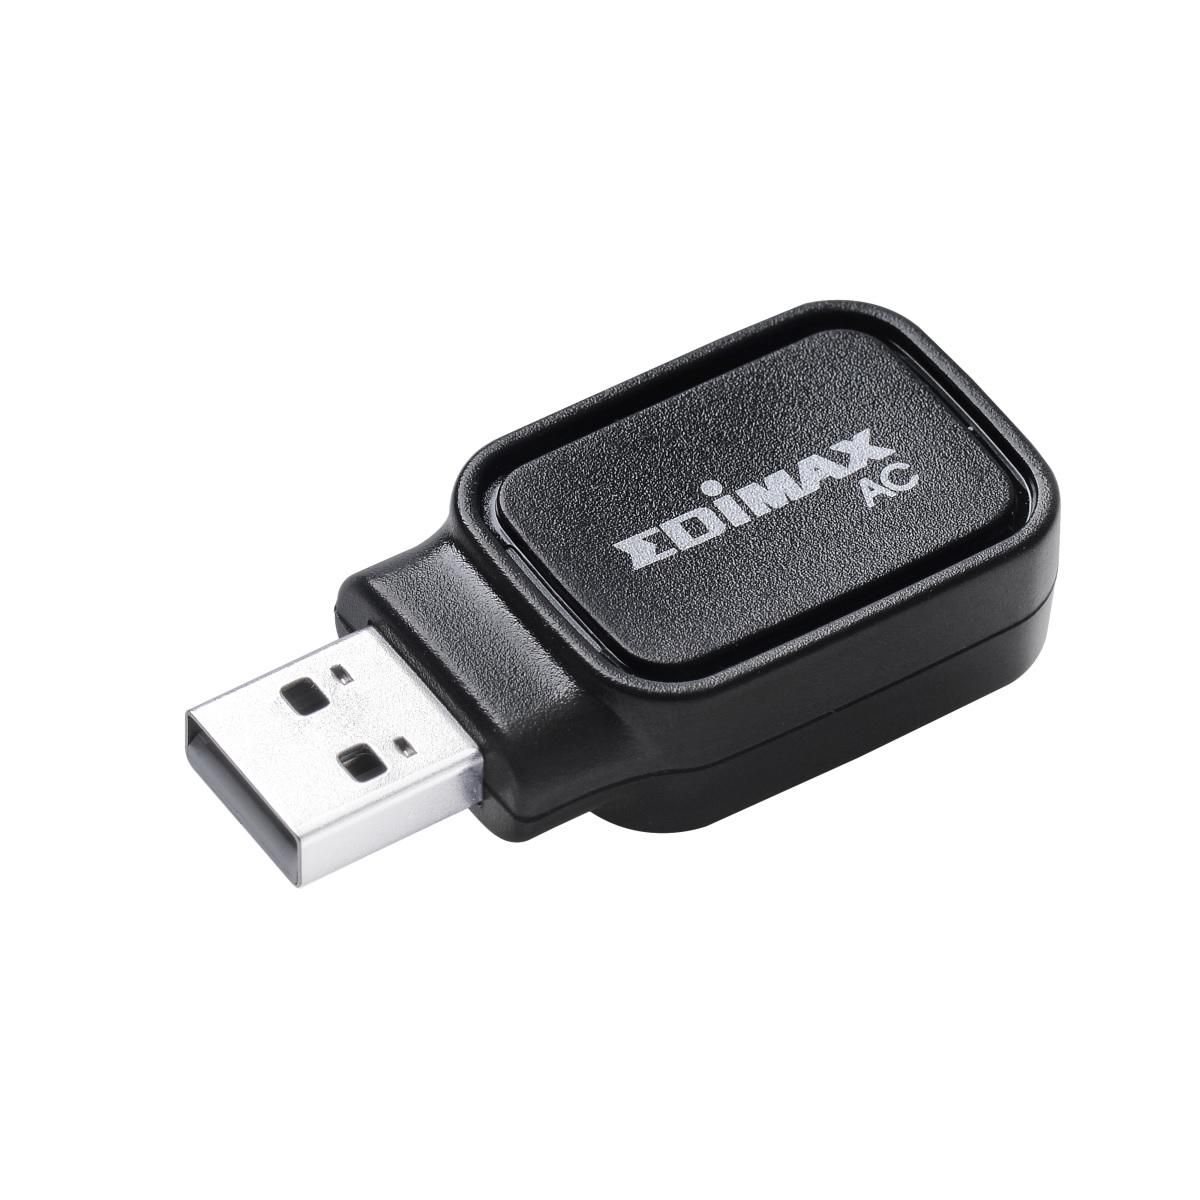 AC600 Dual-Band Wi-Fi & Bluetooth 4.0 USB Adapter_1